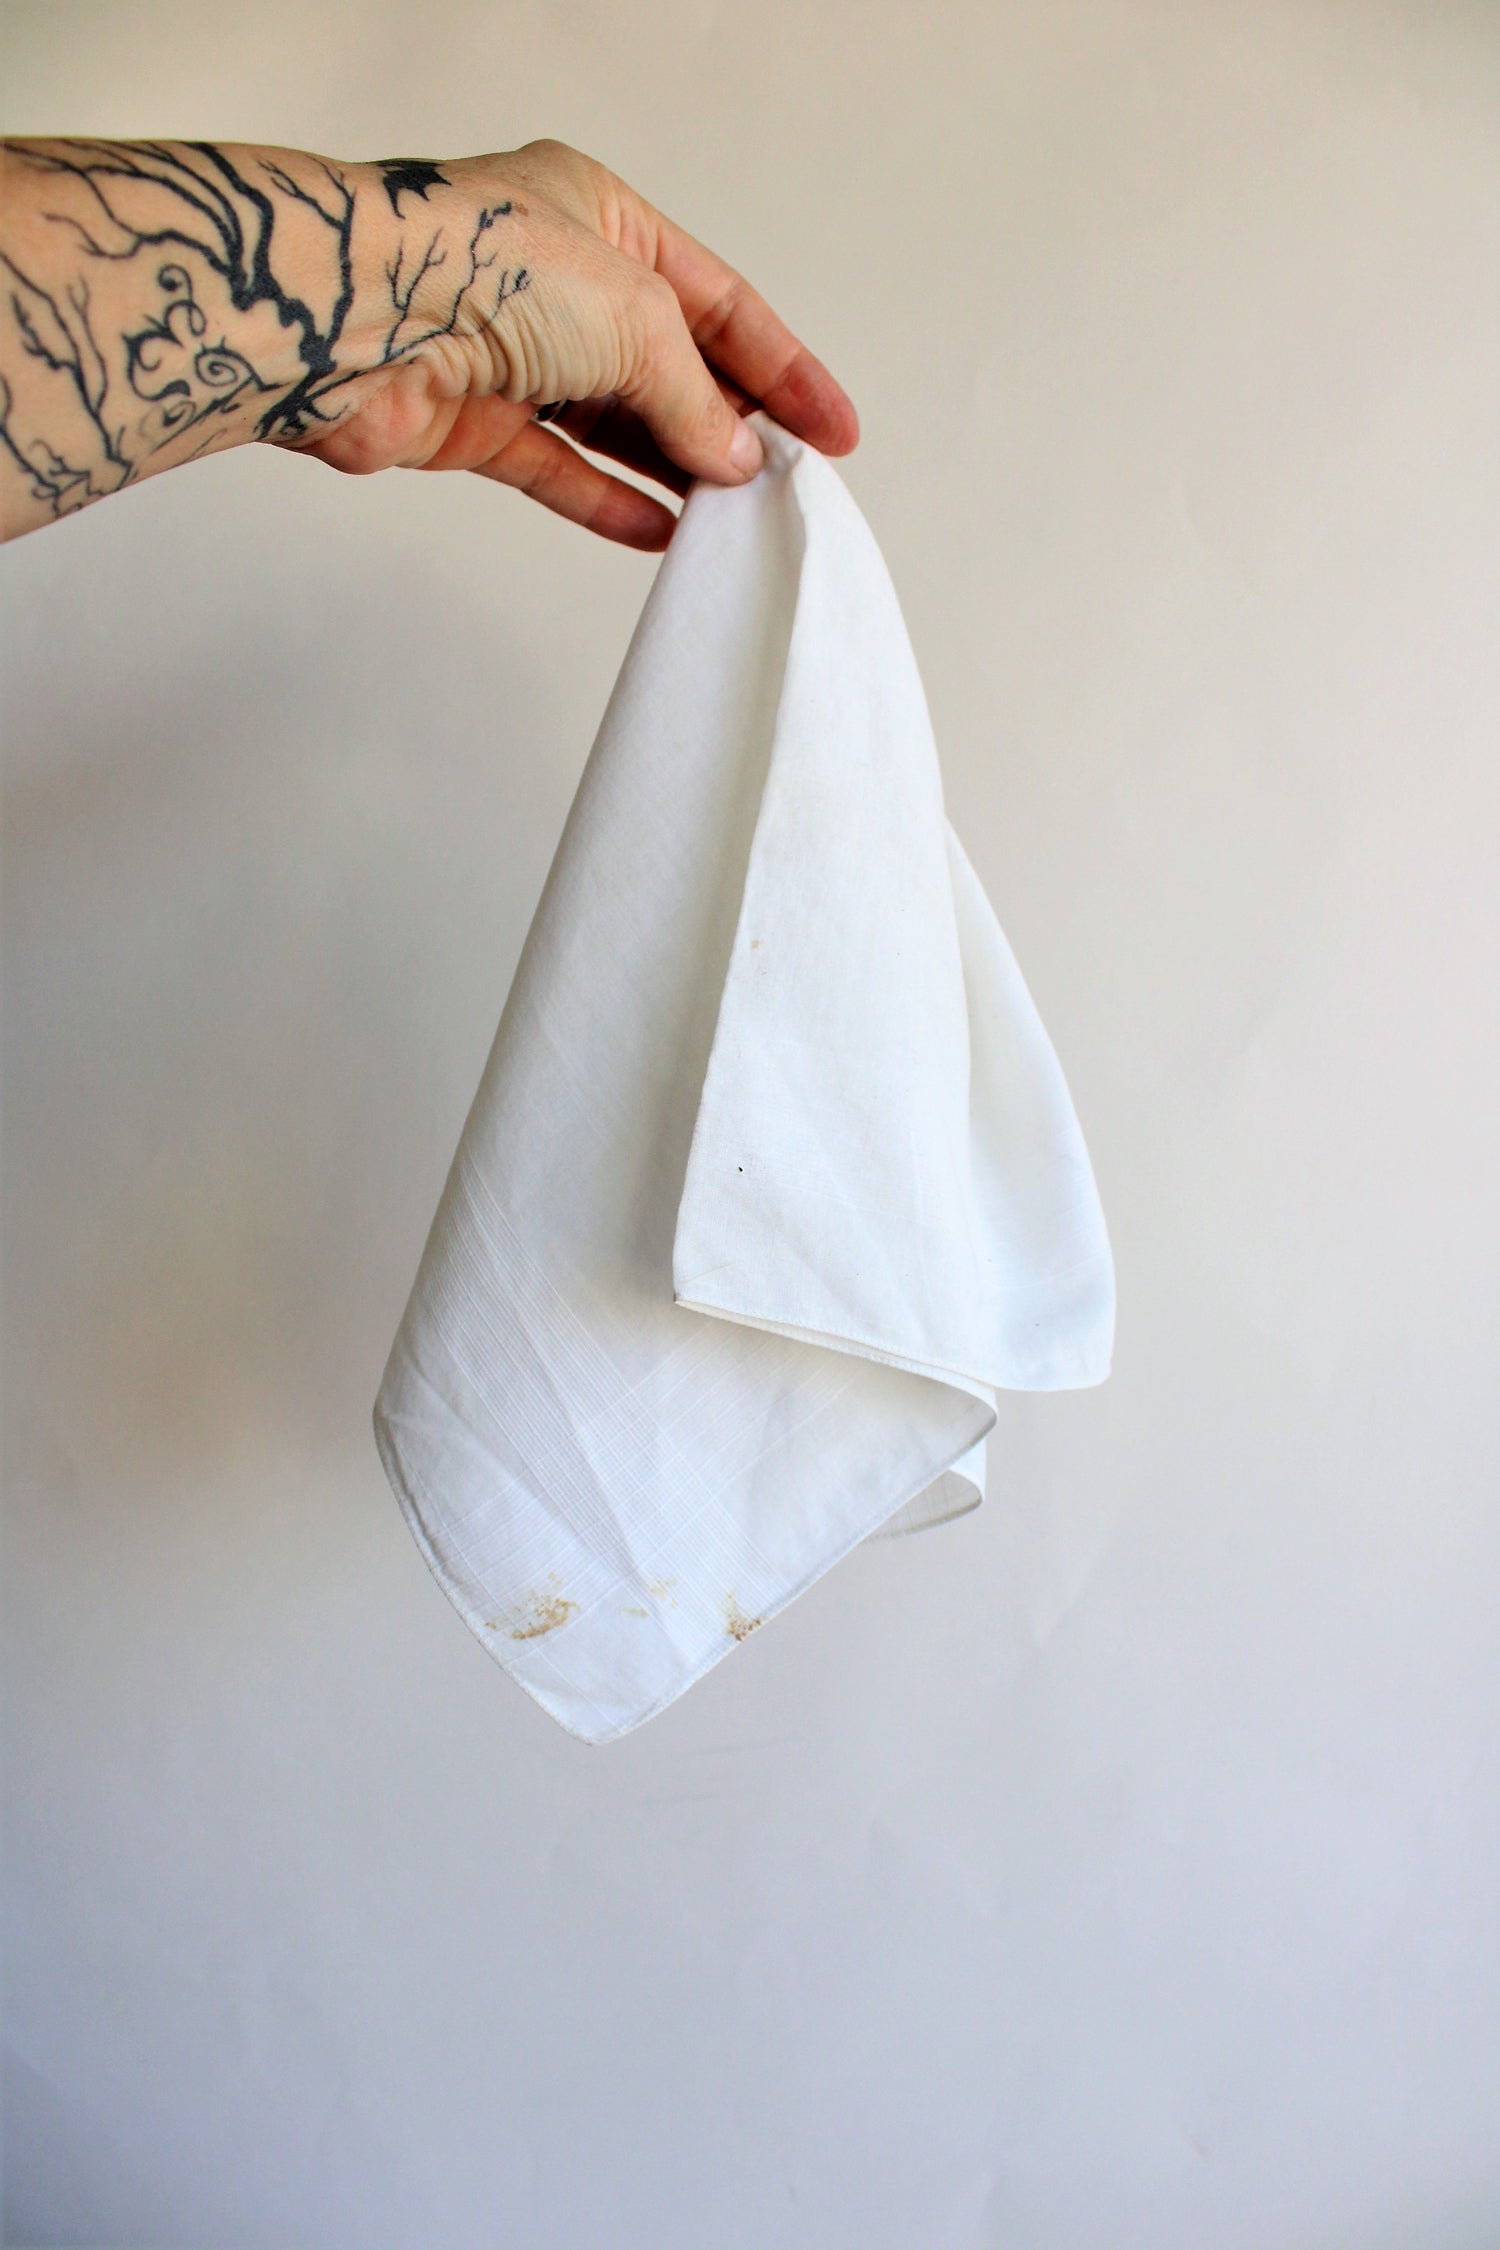 Two Vintage Men's Handkerchiefs in White Cotton